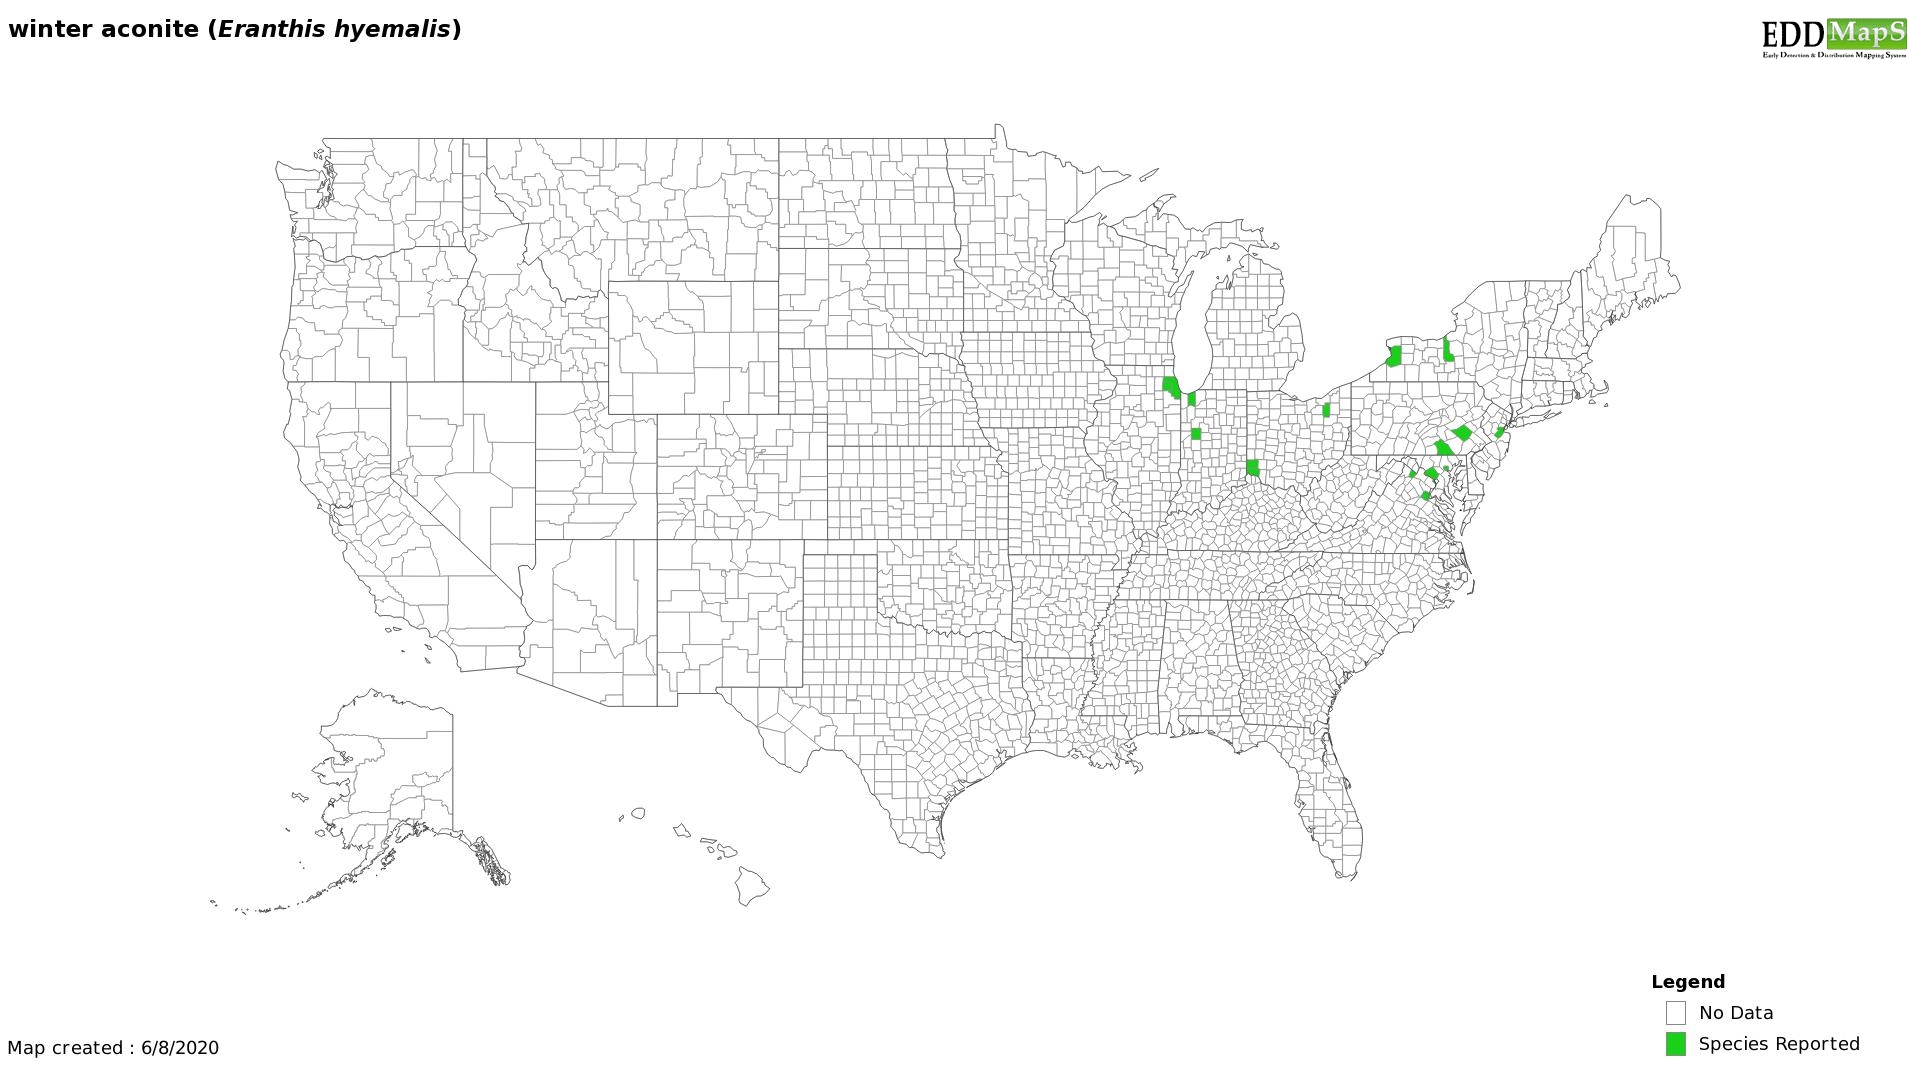 Winter aconite distribution - United States